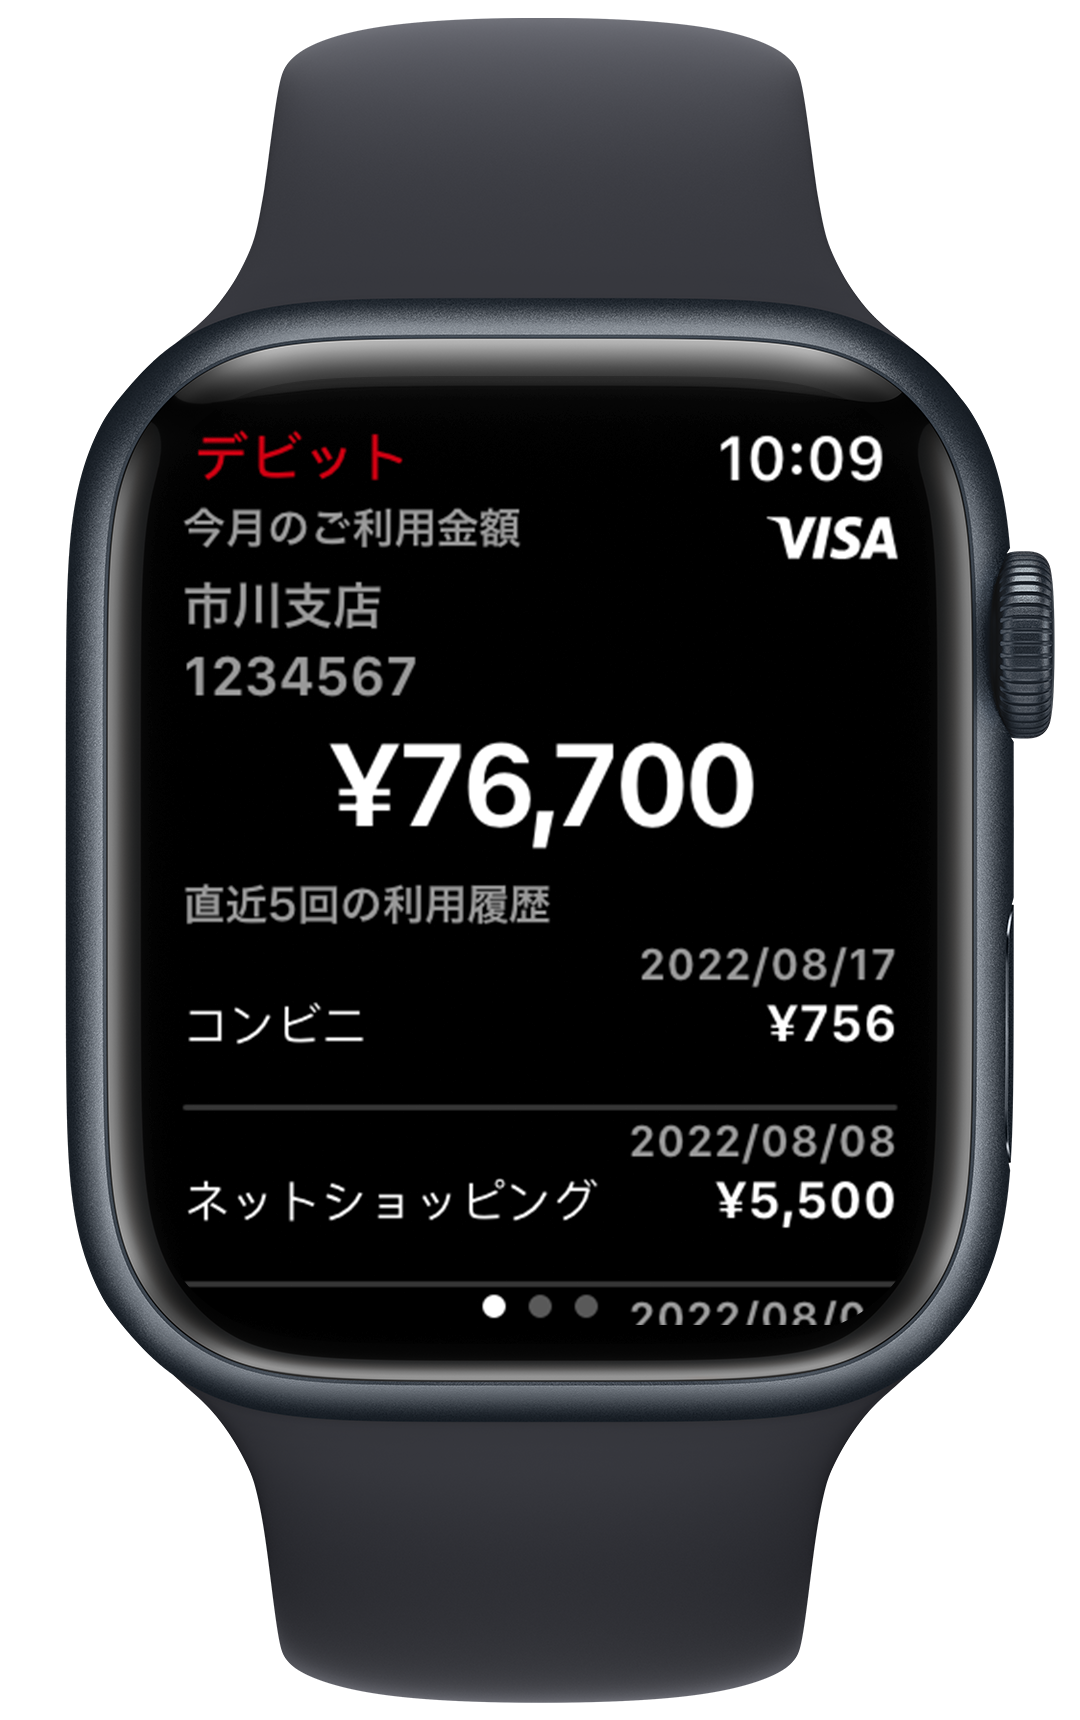 Apple Watch - あたん様 専用ページ✨ AppleWatchの+spbgp44.ru